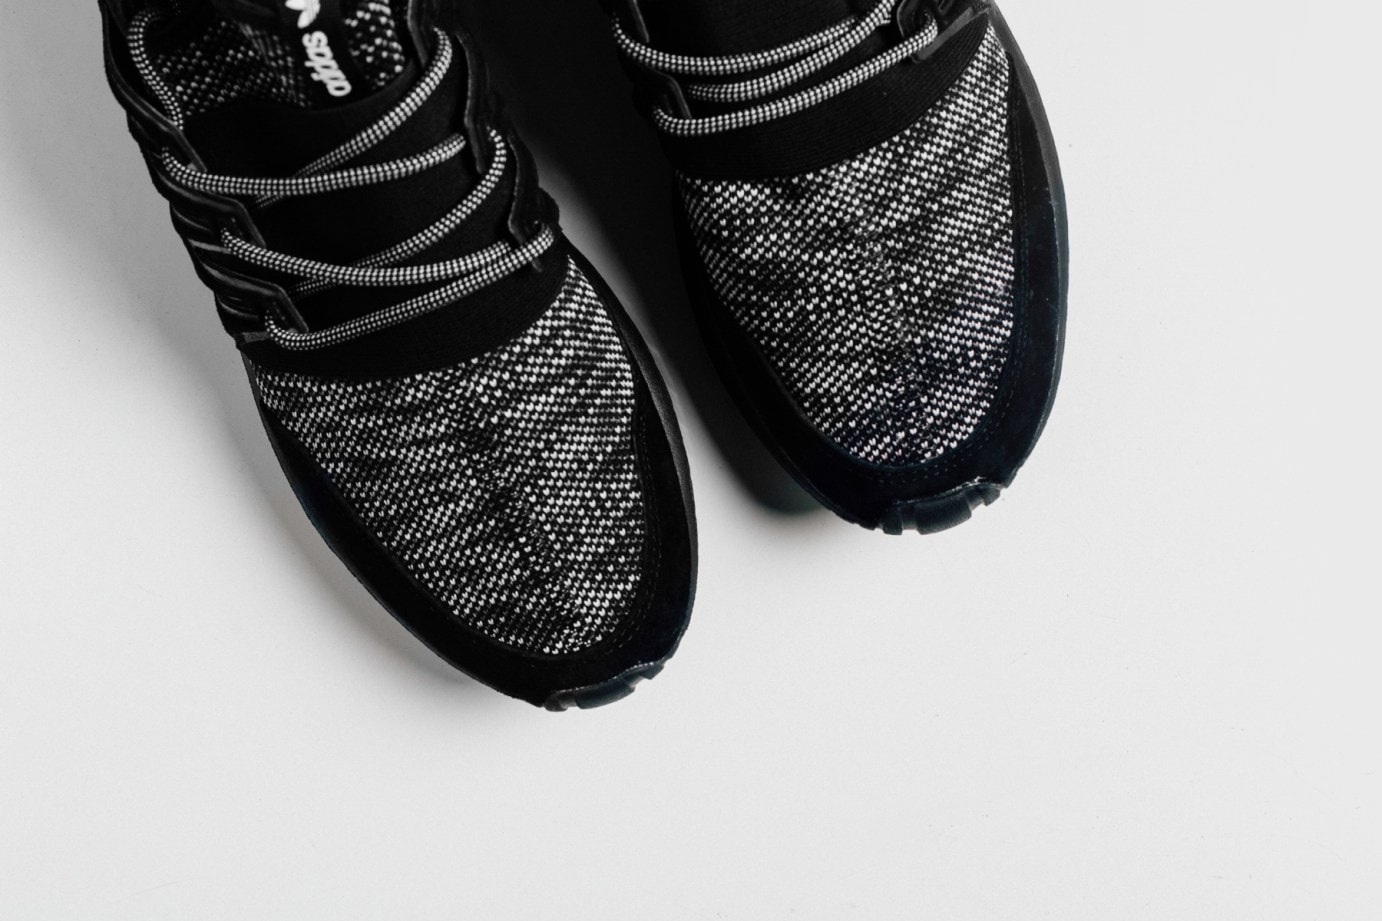 adidas Originals Tubular Radial "Mélange Knit" Pack